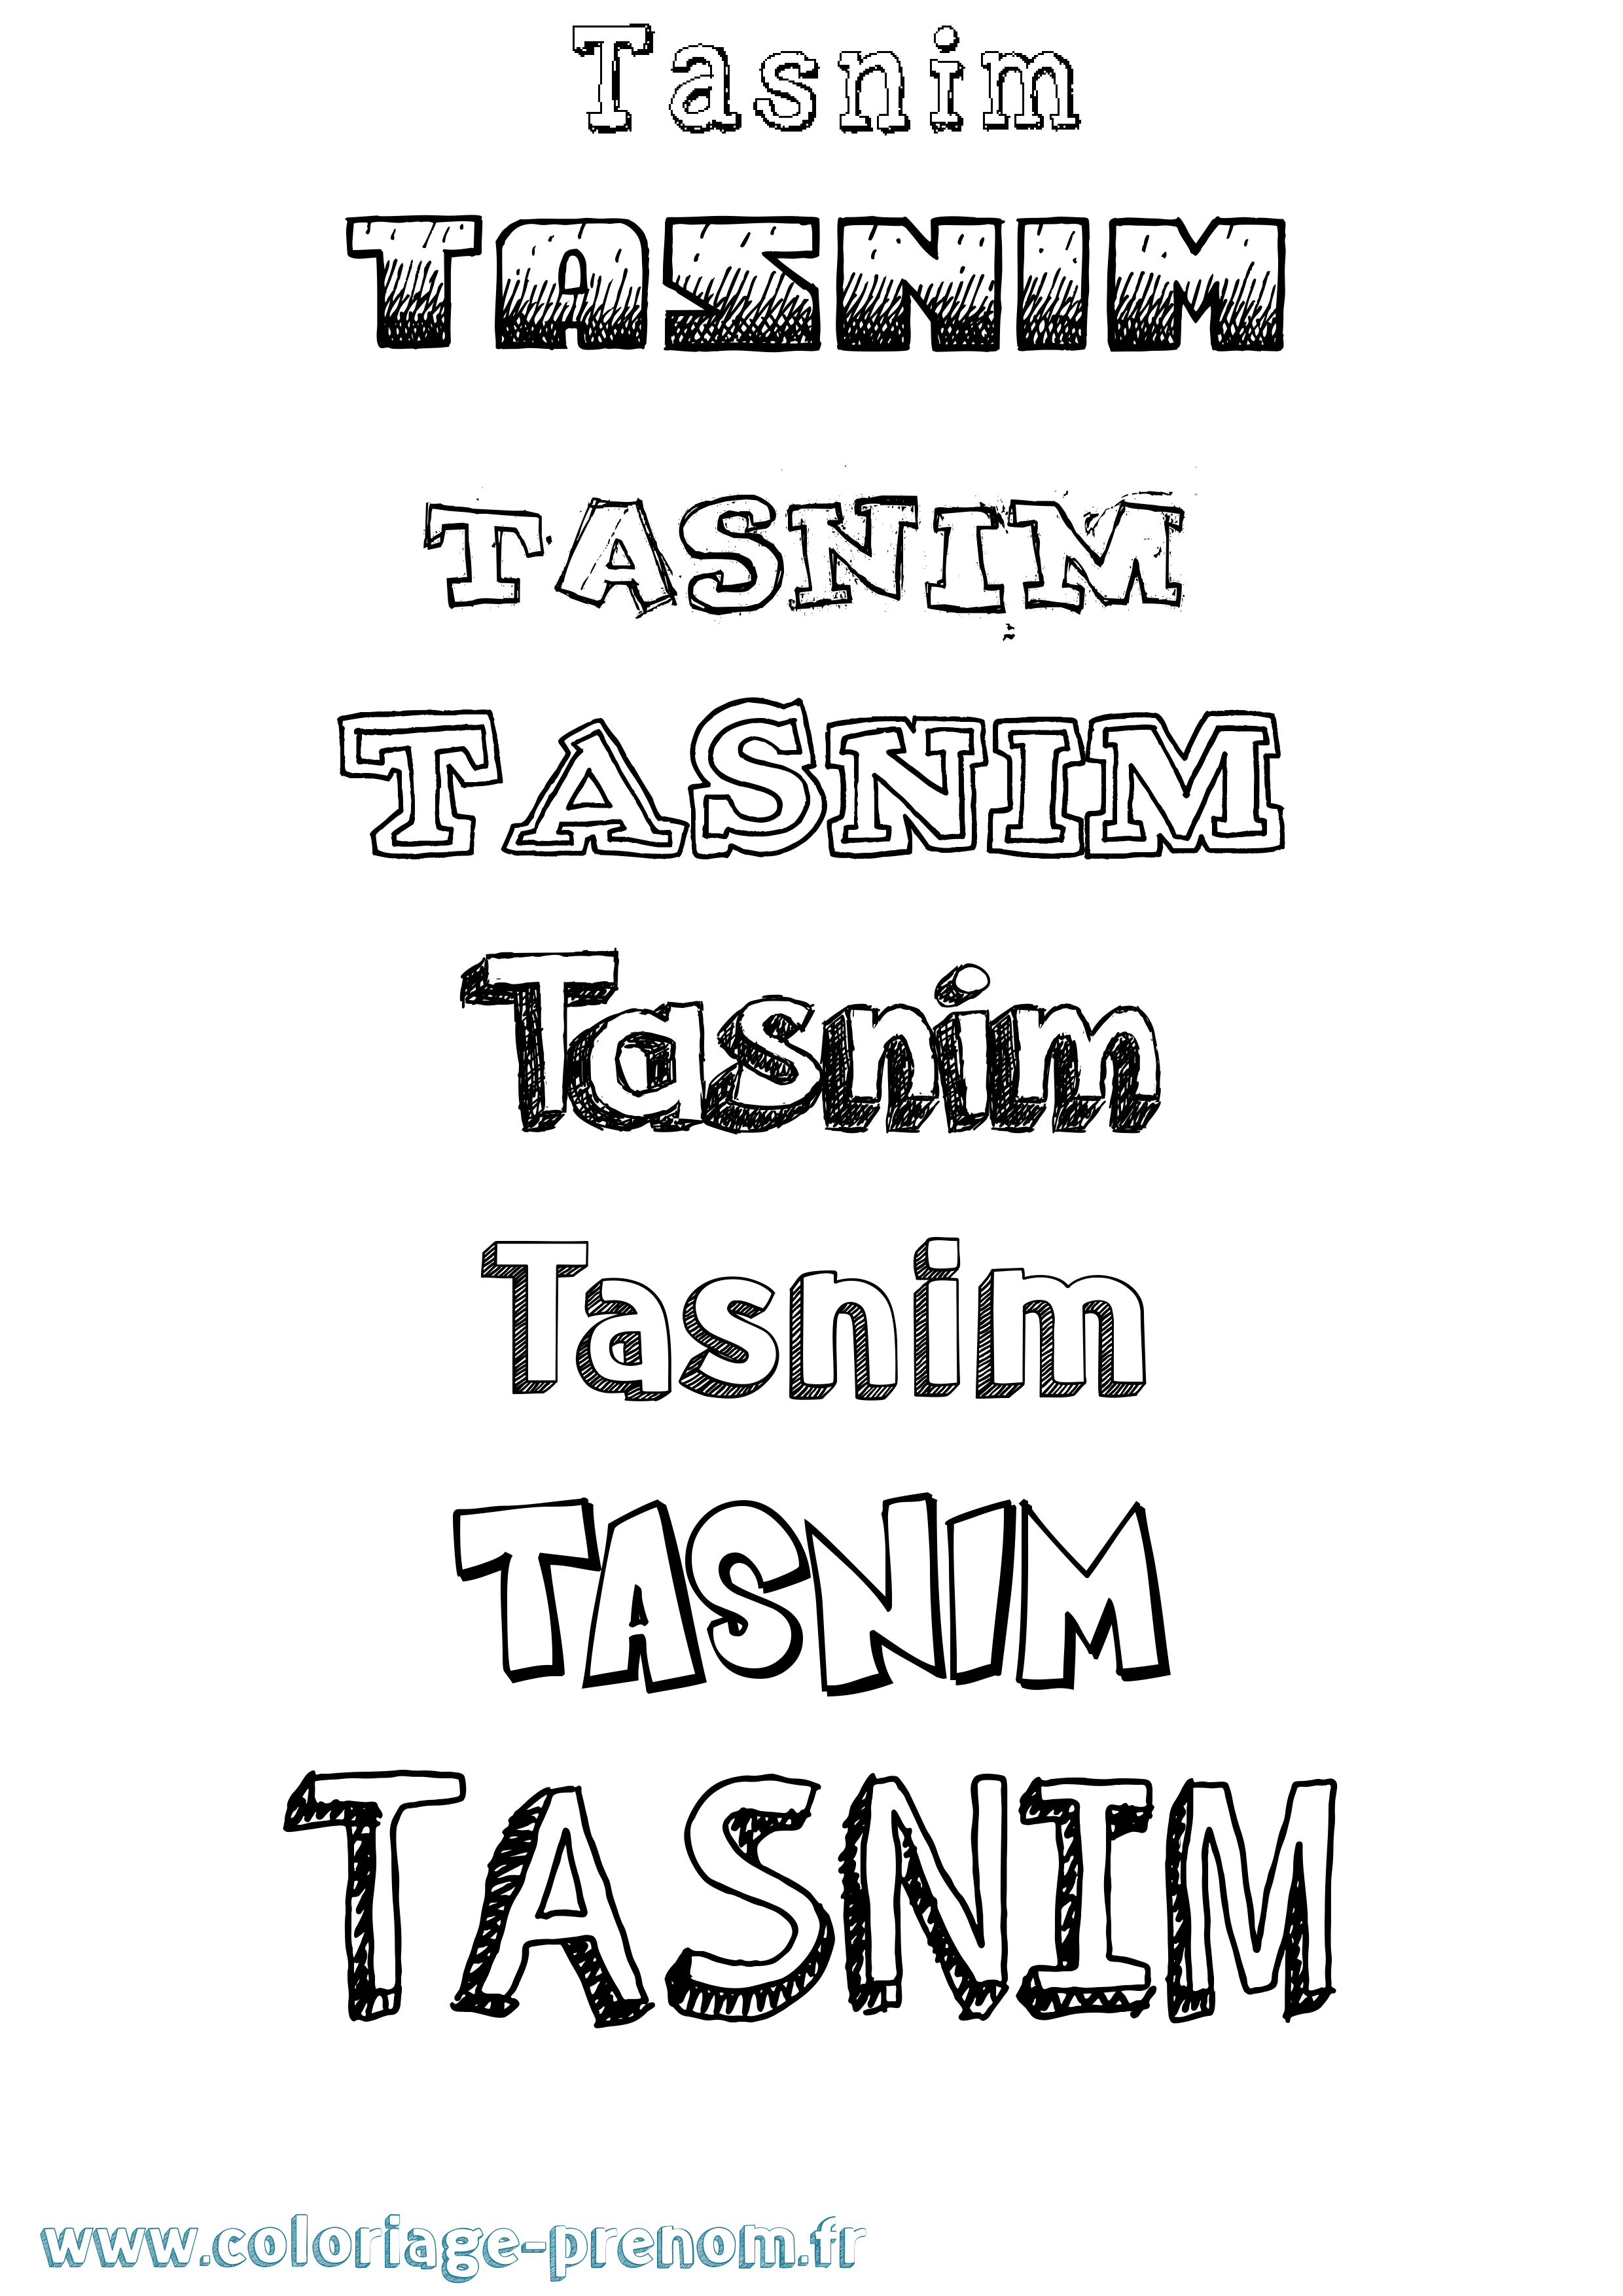 Coloriage prénom Tasnim Dessiné